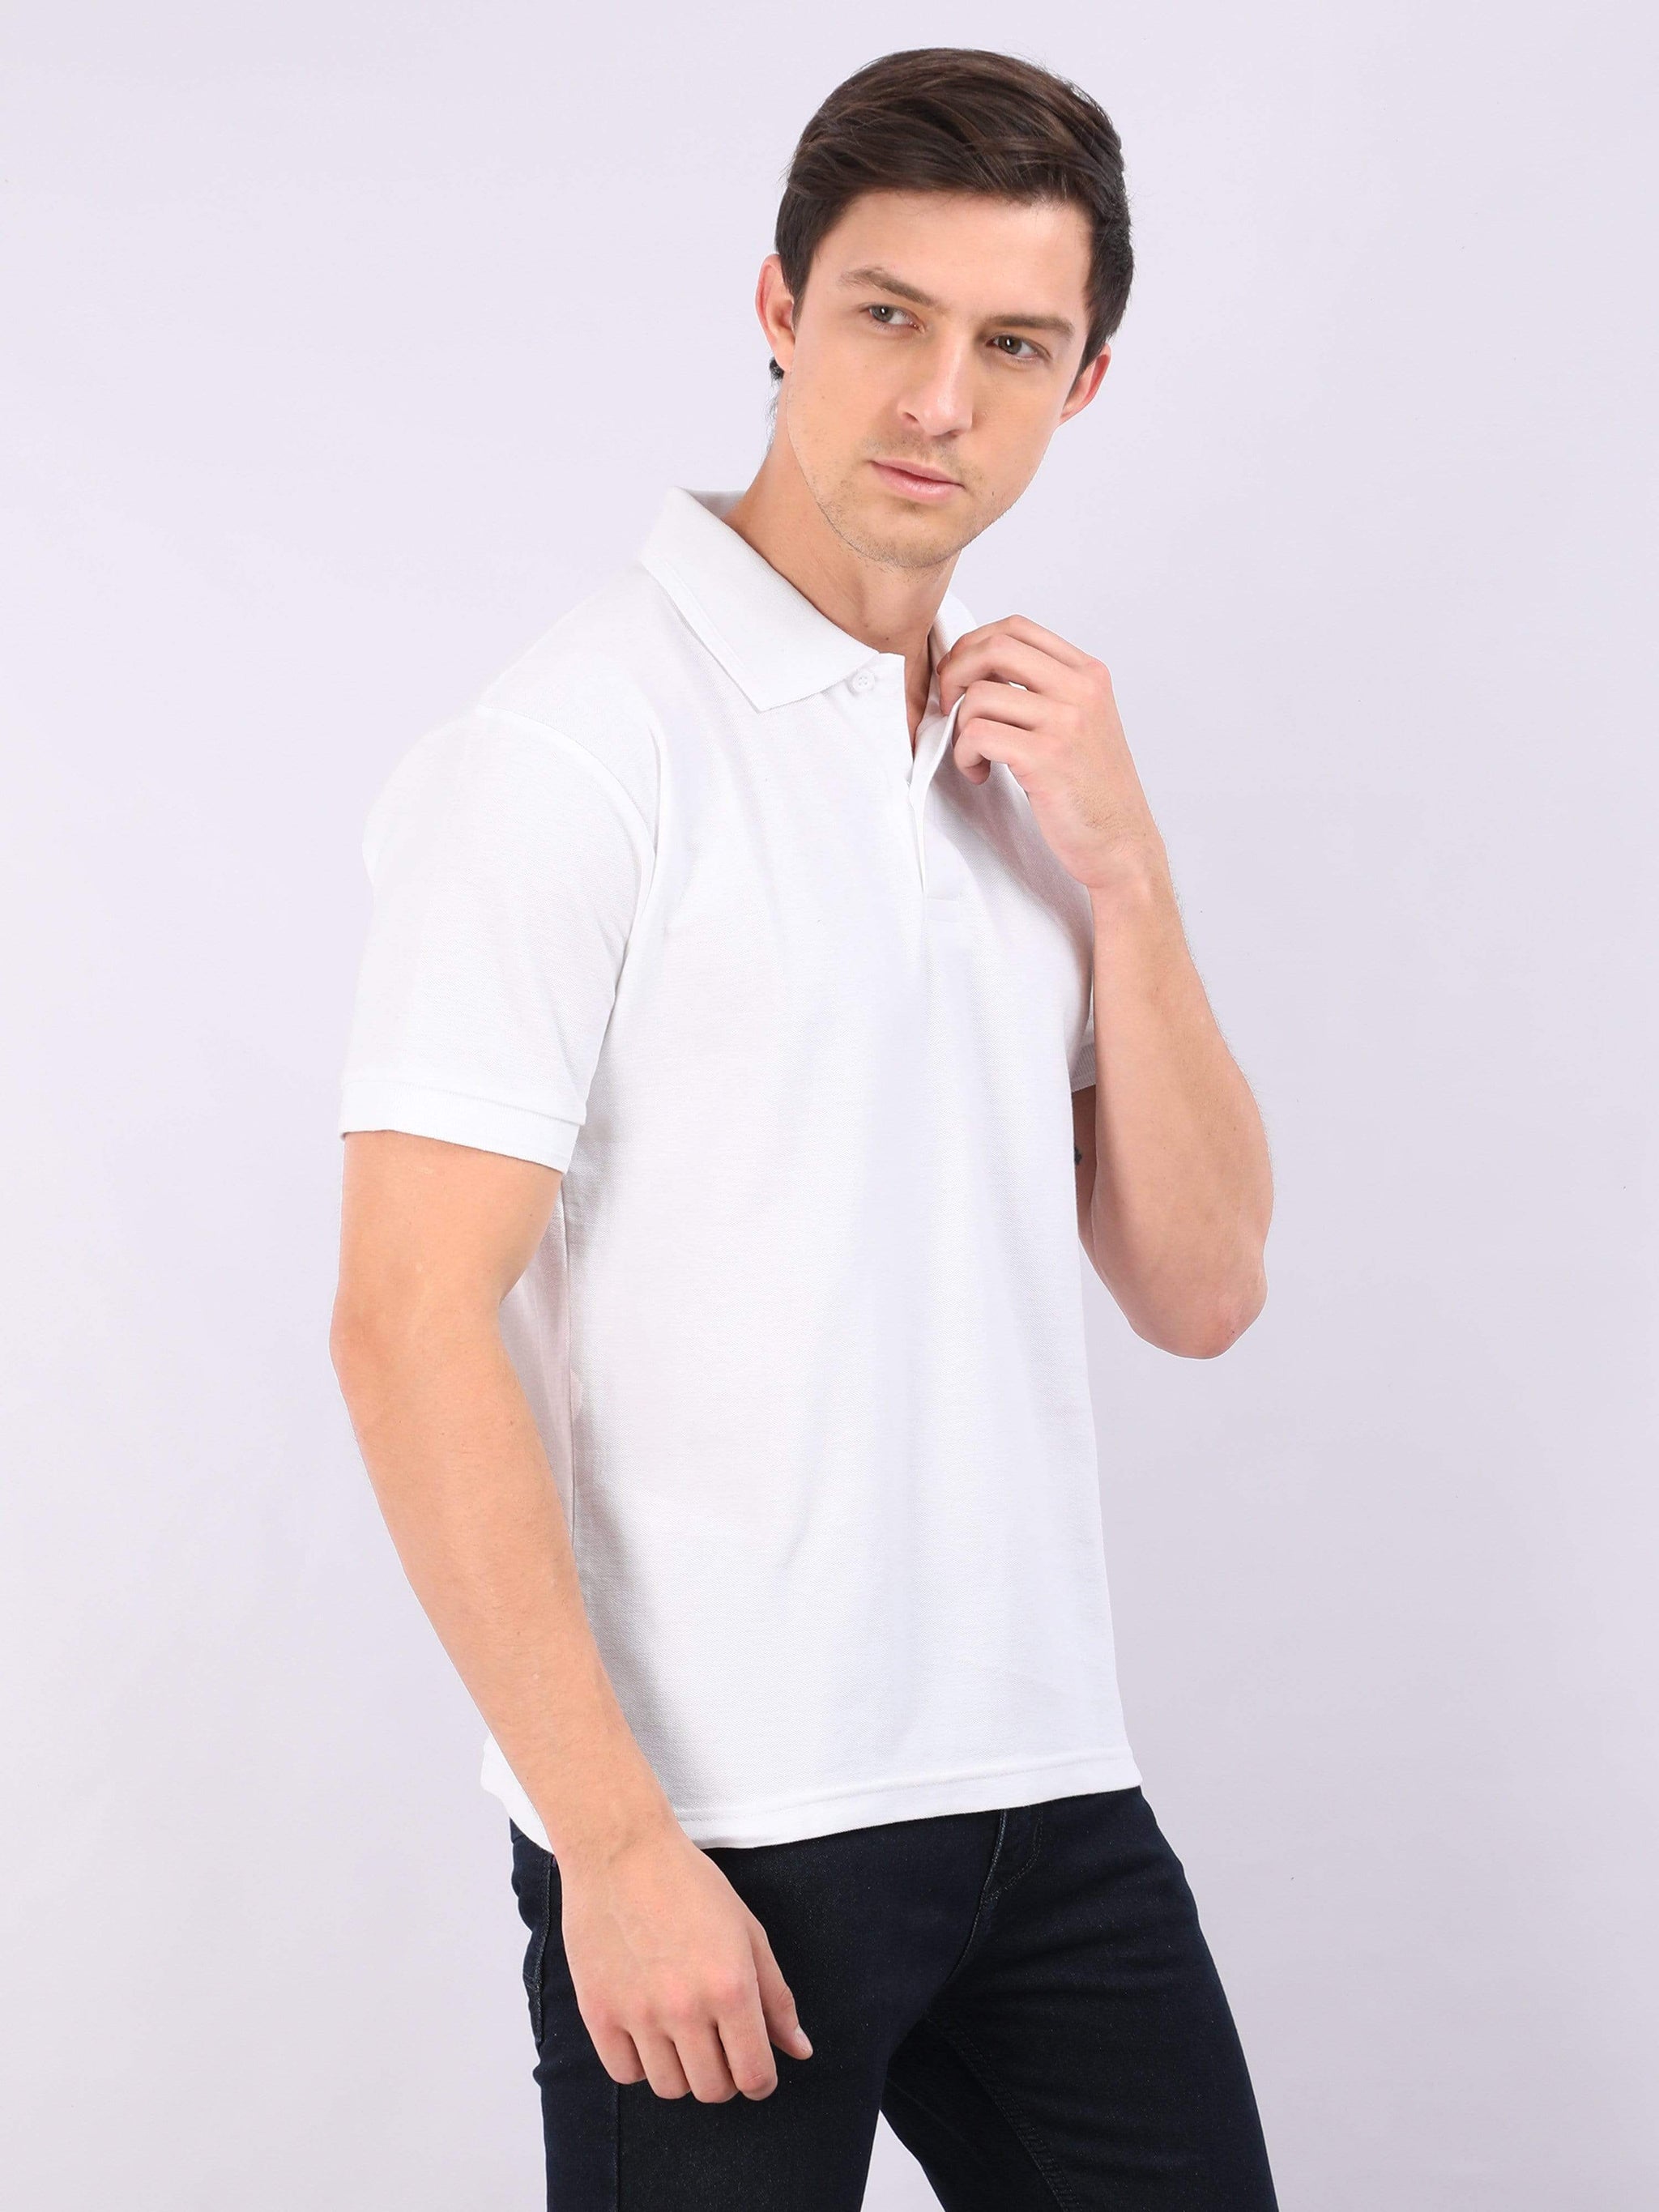 Xura Solid Men Polo Neck White Regular Fit T-Shirt Plain Xura